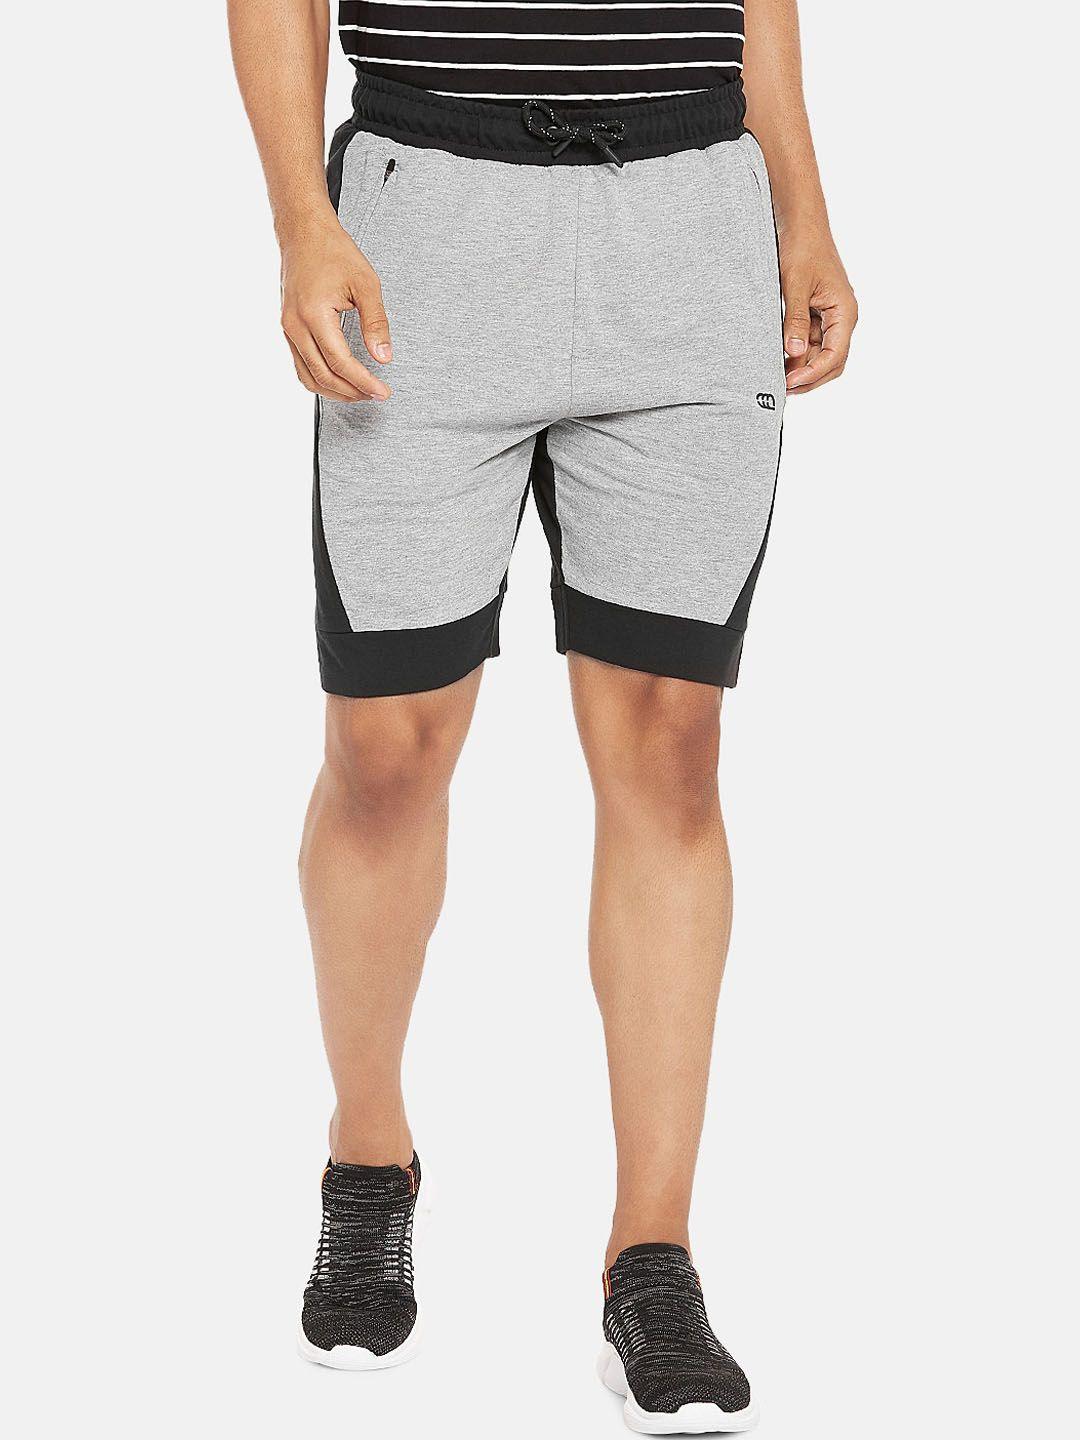 ajile-by-pantaloons-men-grey-&-black-colourblocked-slim-fit-sports-shorts